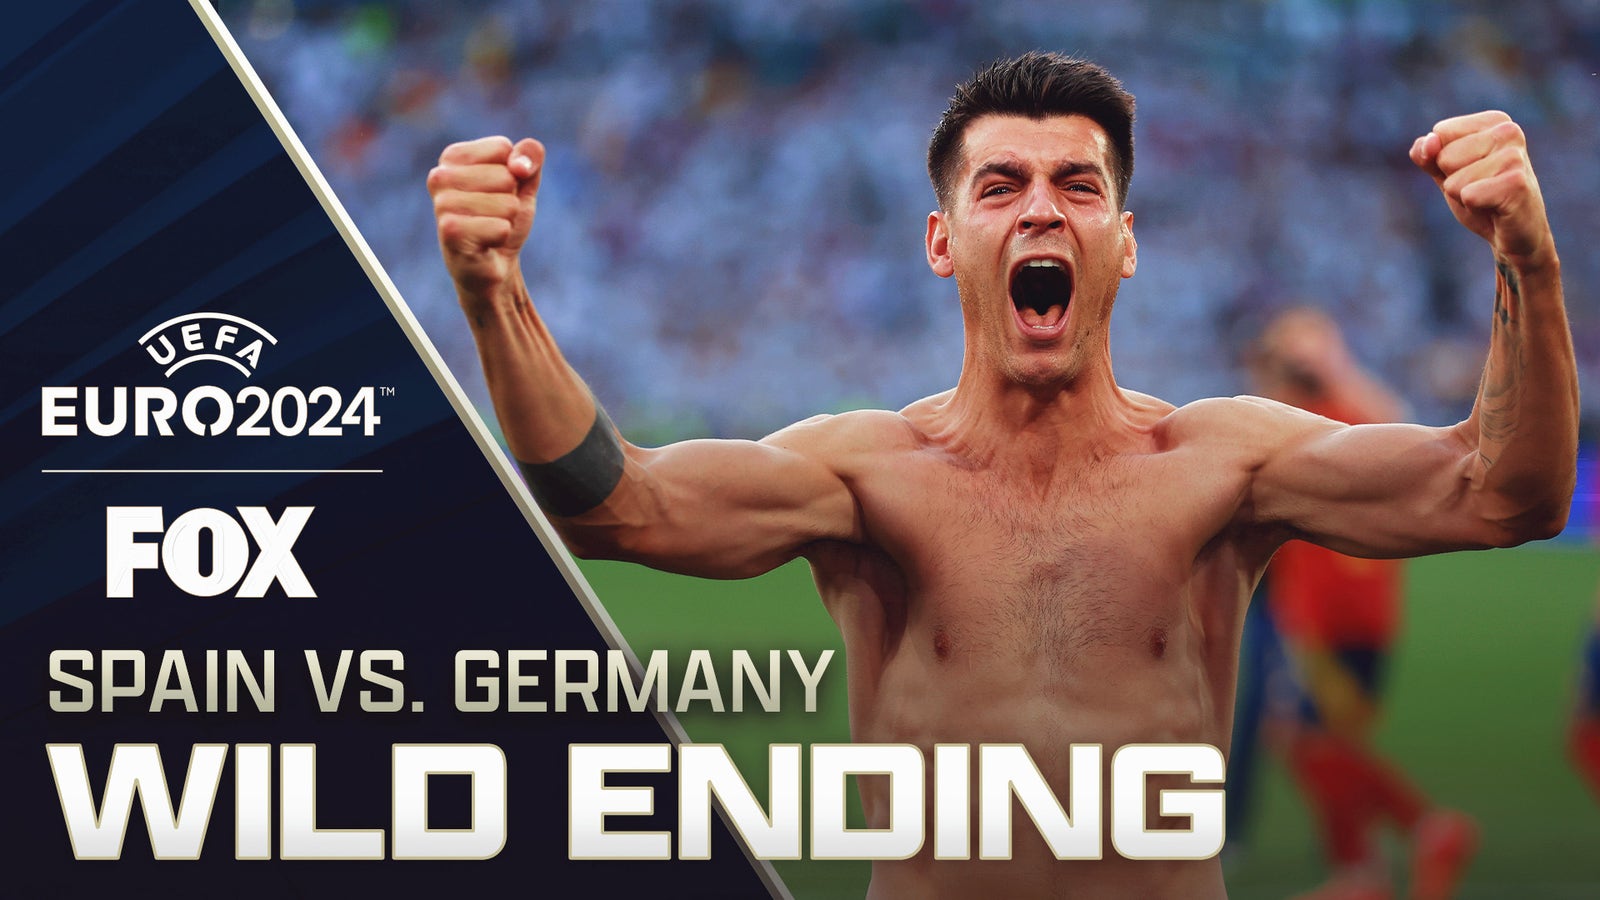 Spain vs. Germany: Final 3 minutes of UNREAL quarterfinal match | UEFA Euro 2024